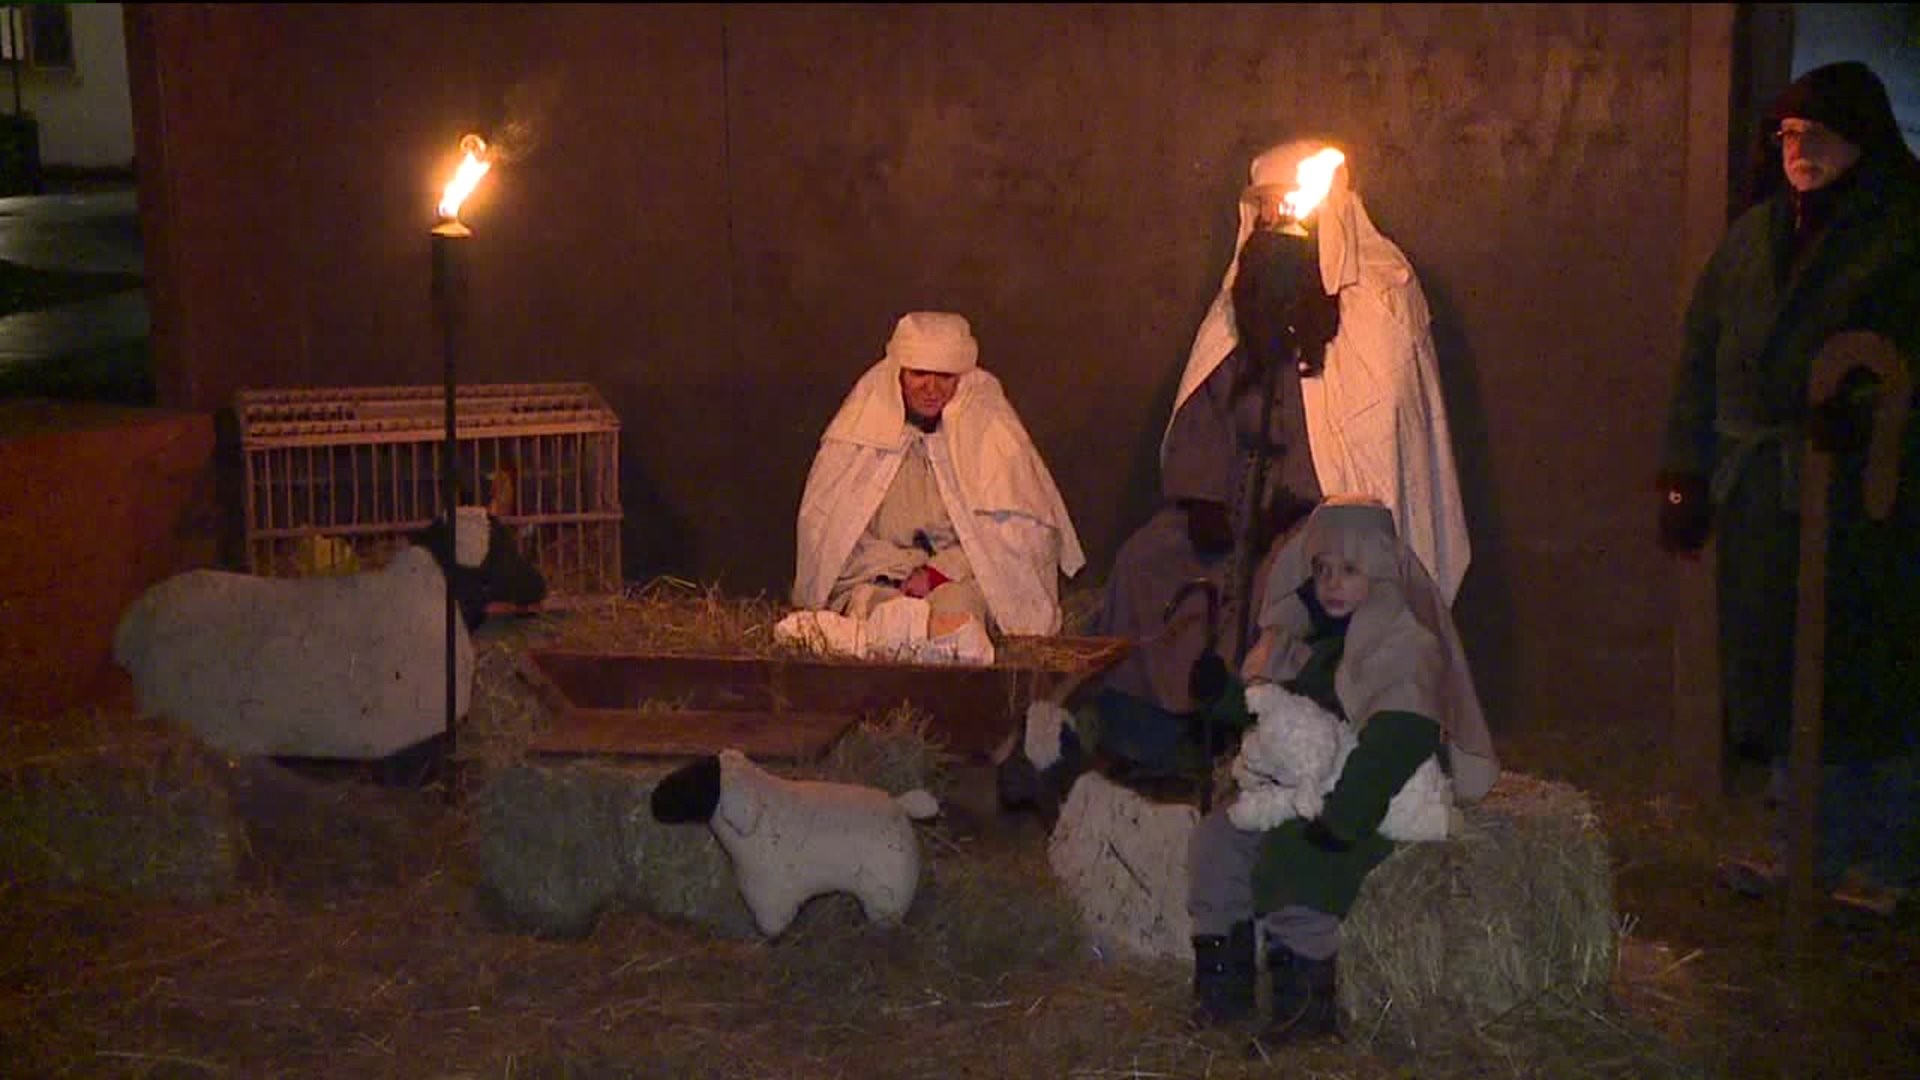 Tunkhannock United Methodist Church Invites Community to "Journey to Bethlehem"